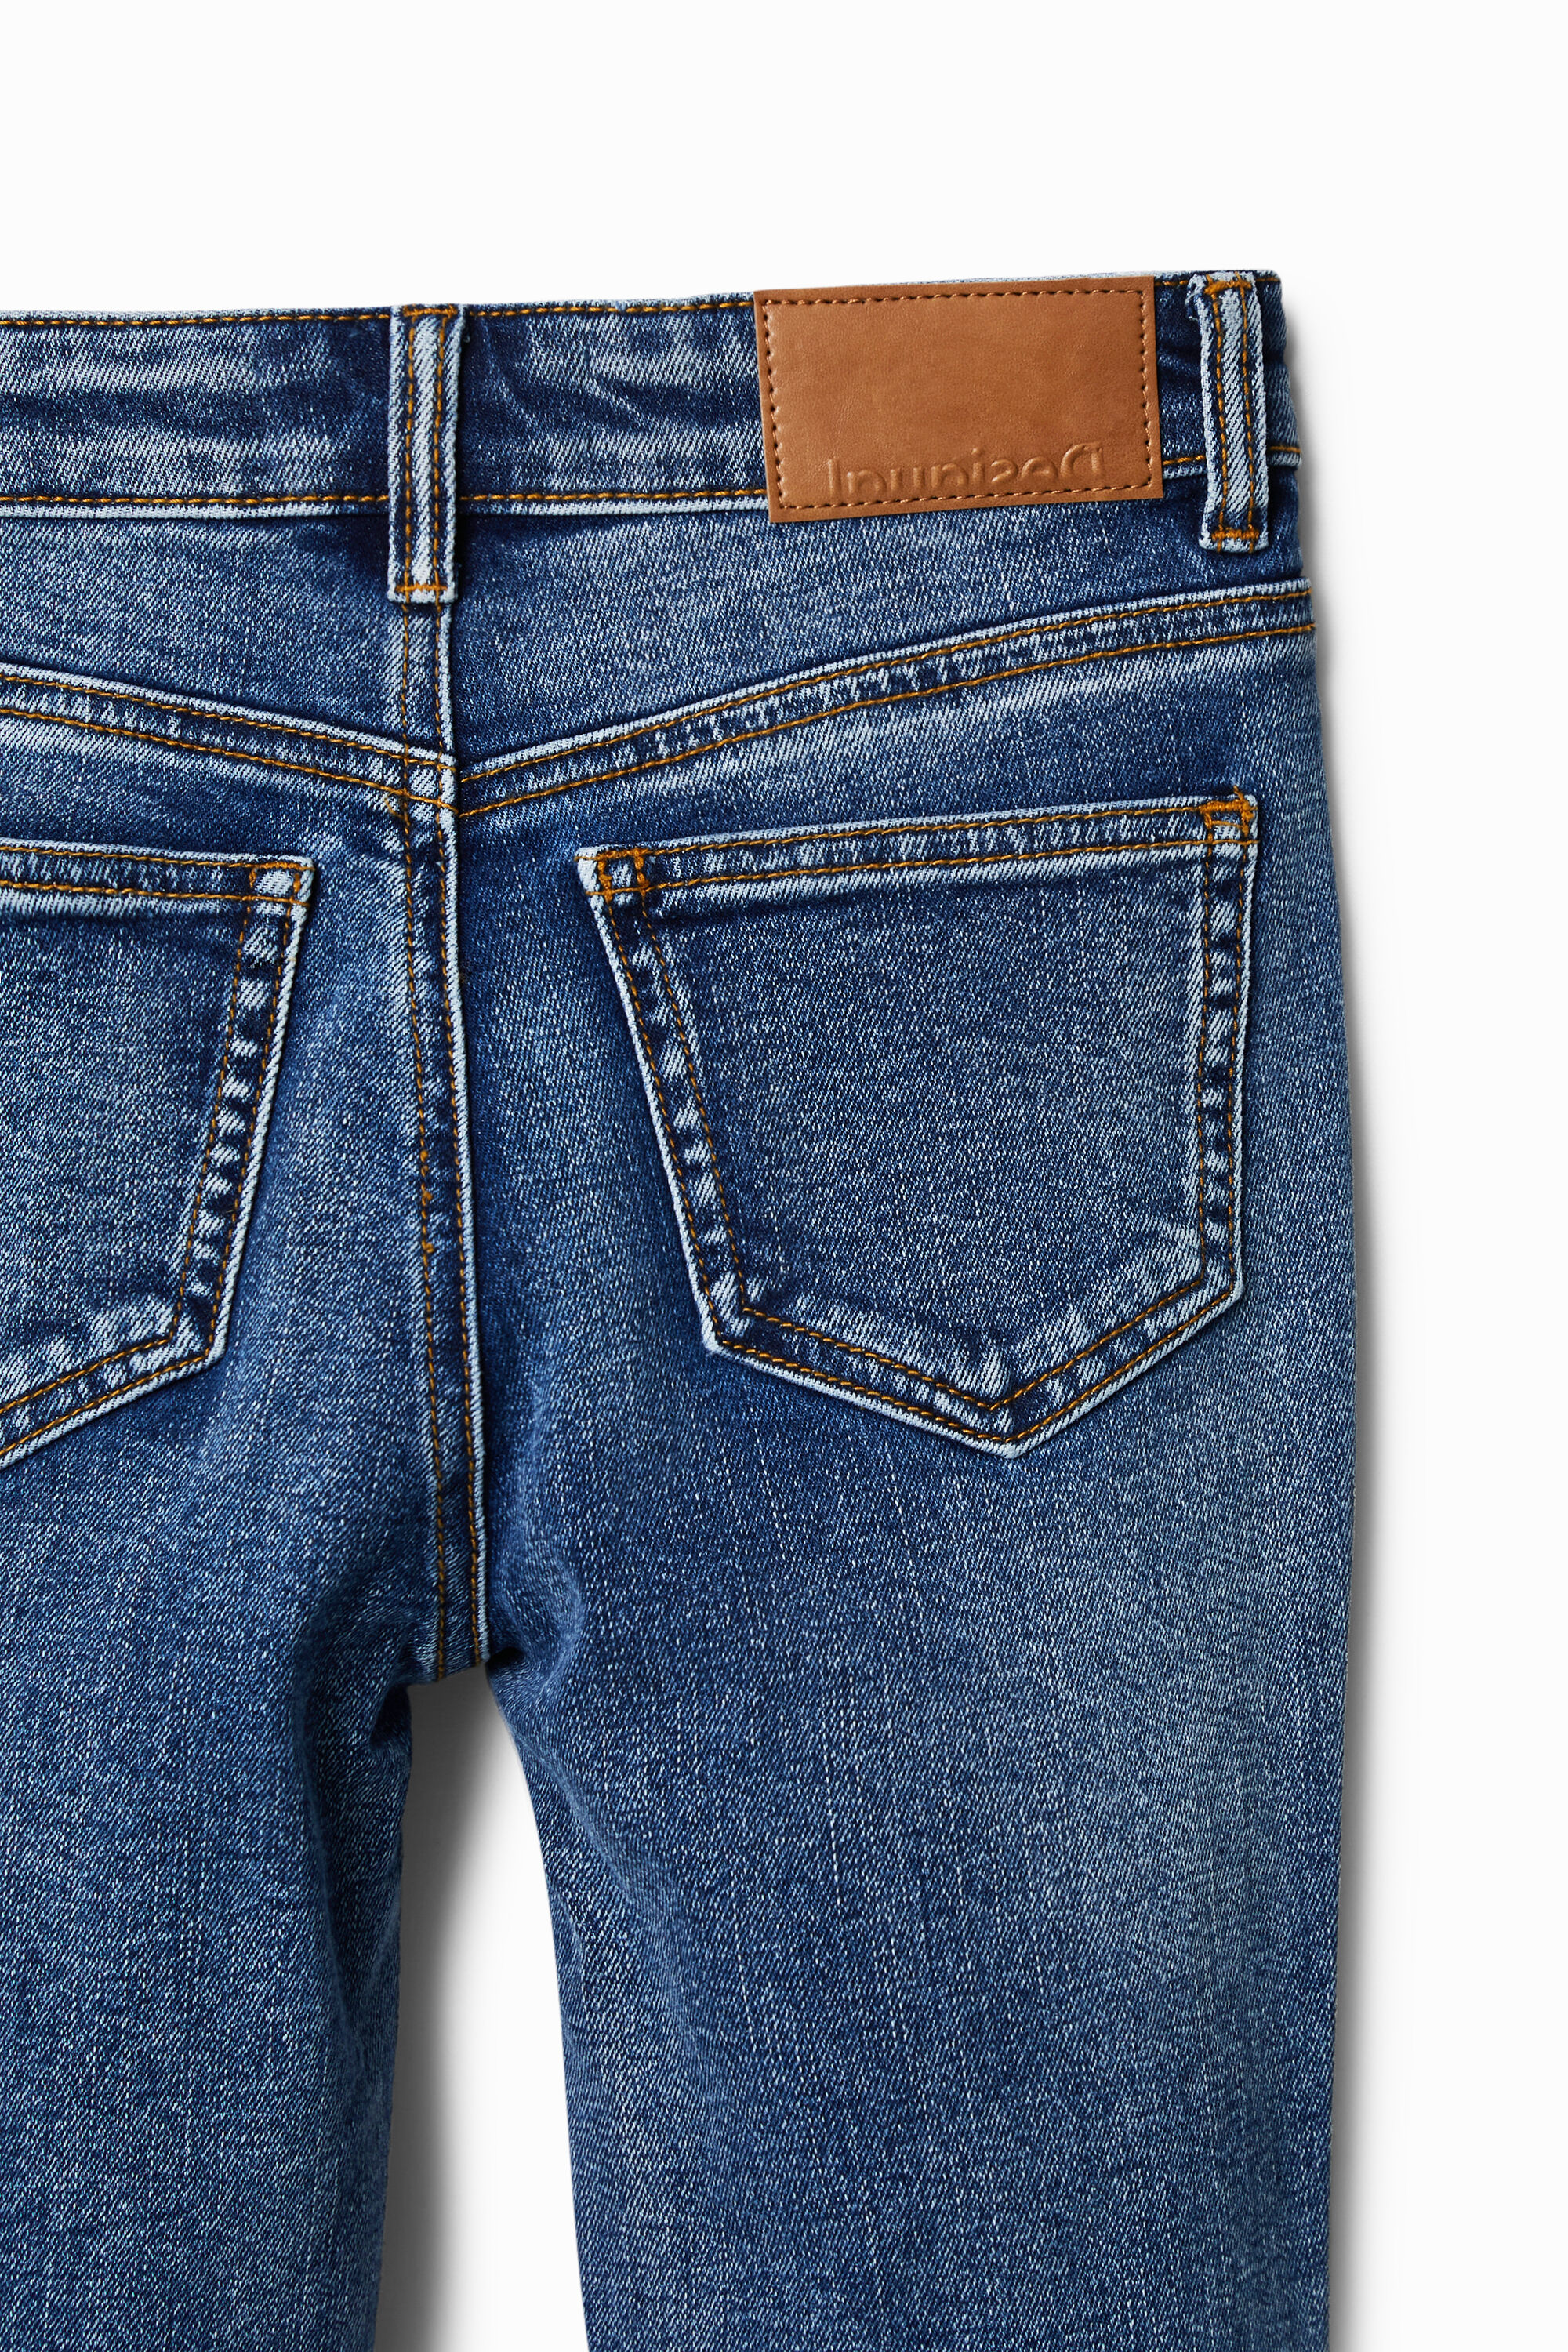 Desigual Girls Clothing Skirts Denim Skirts Flocked cropped flare jeans 